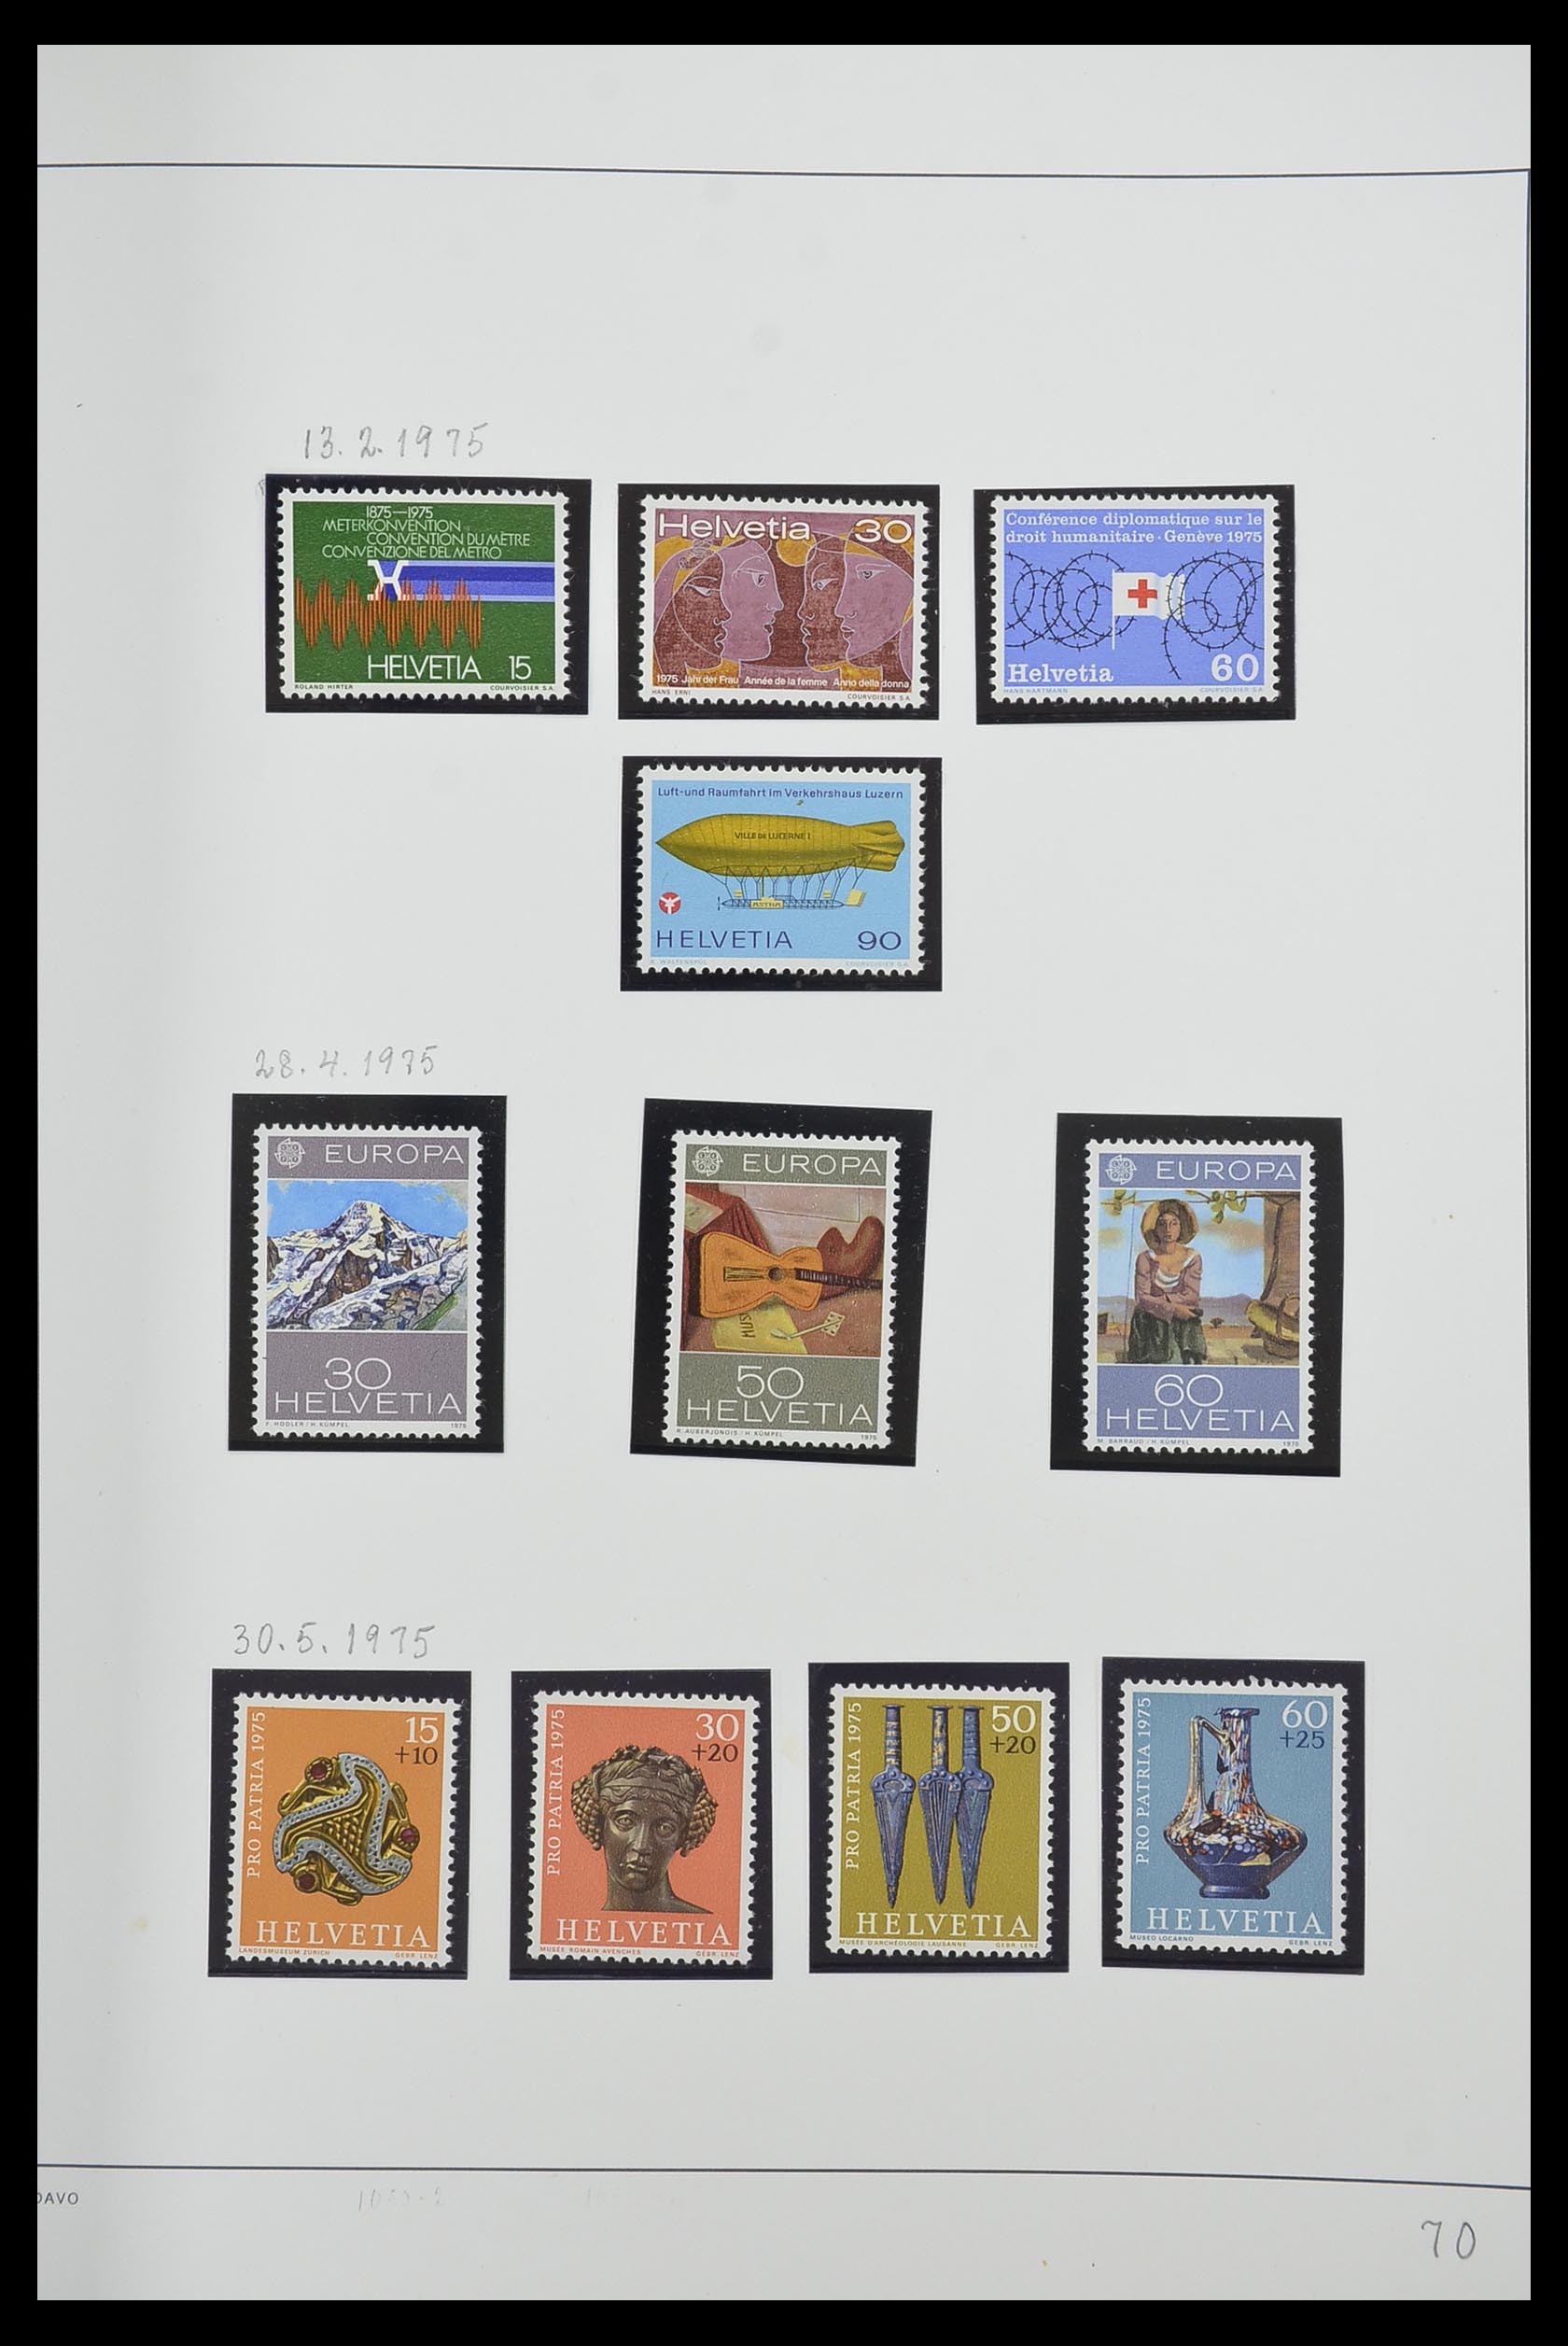 33556 070 - Stamp collection 33556 Switzerland 1862-2000.